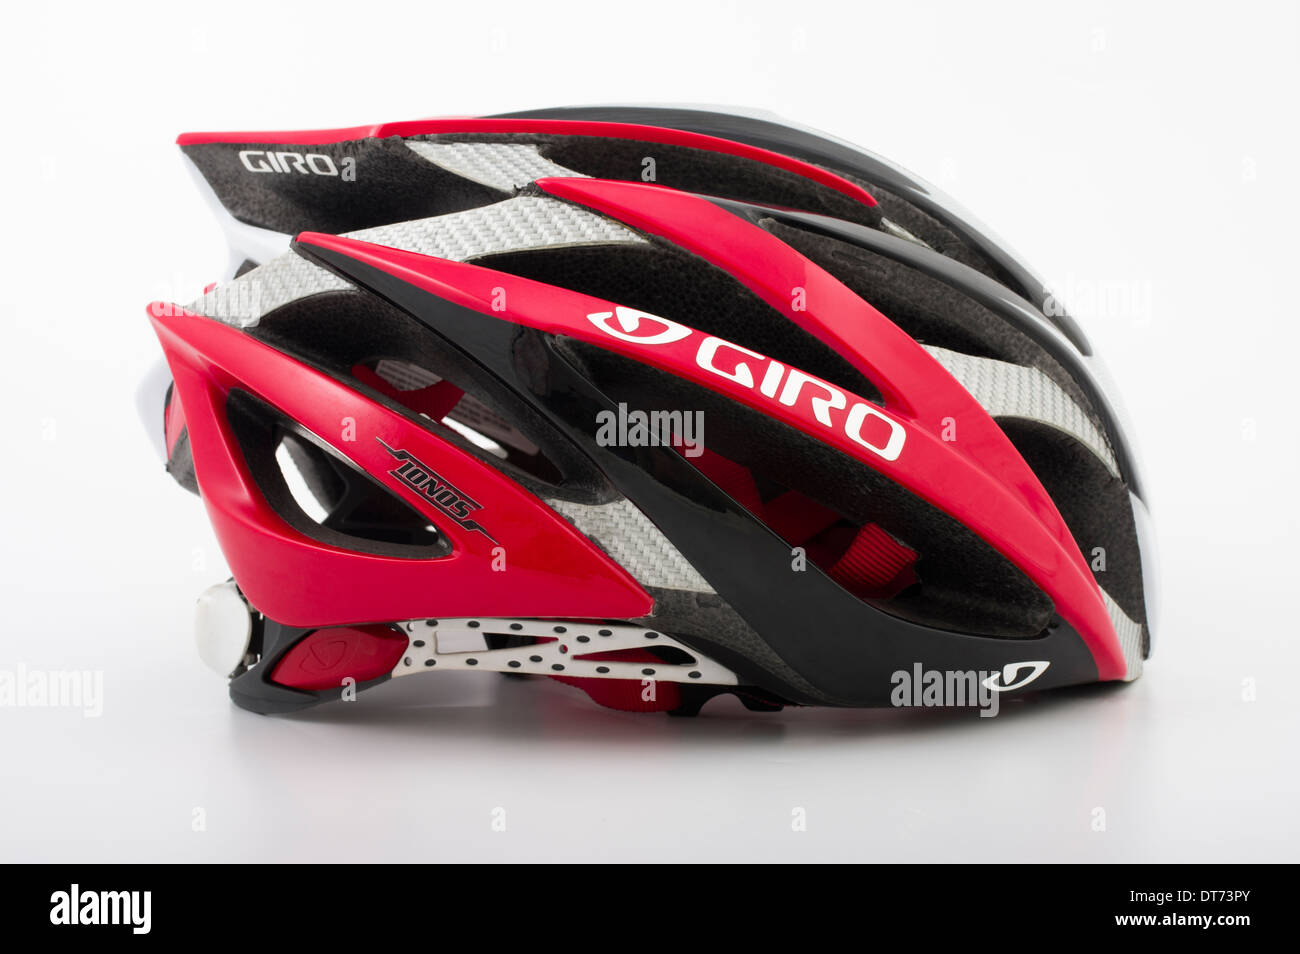 Giro Ionos lightweight road race cycling / triathlon helmet Stock Photo